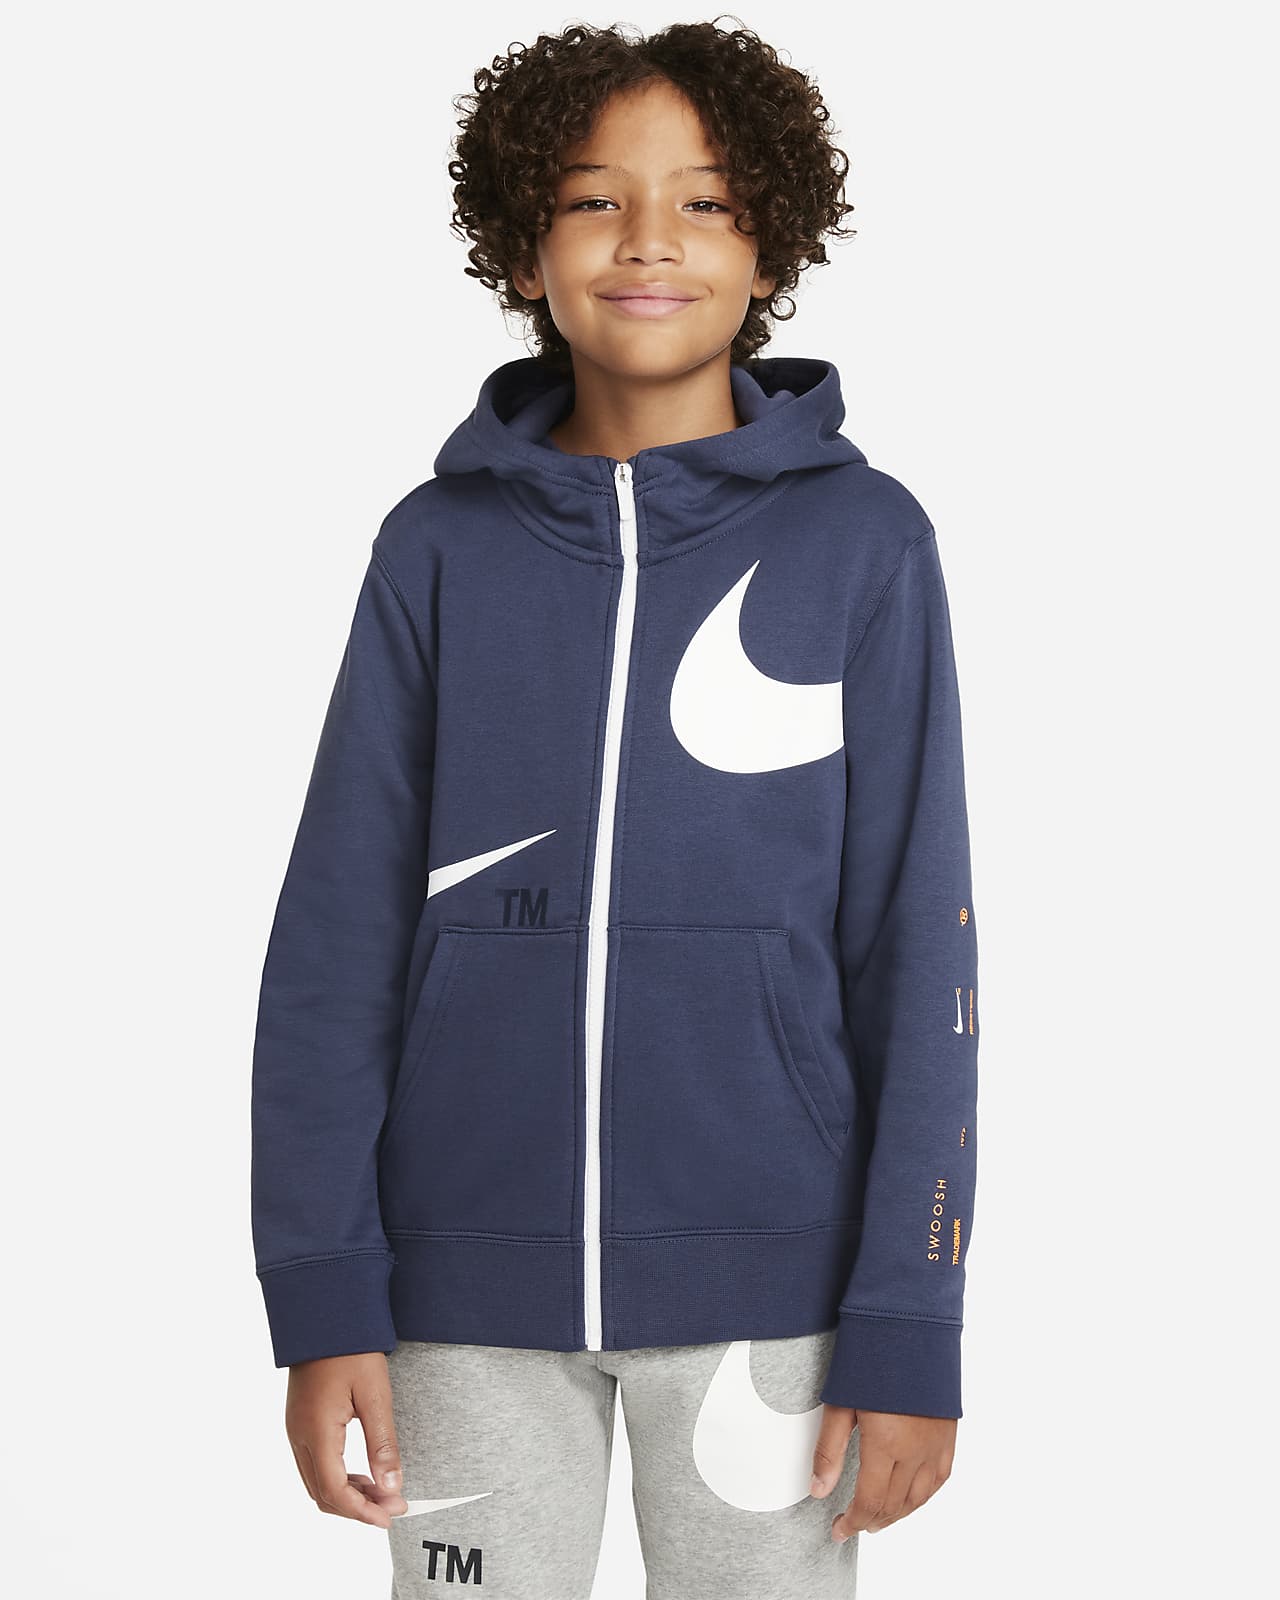 Nike Sportswear Swoosh Sudadera con capucha con cremallera completa de tejido Fleece - Niño